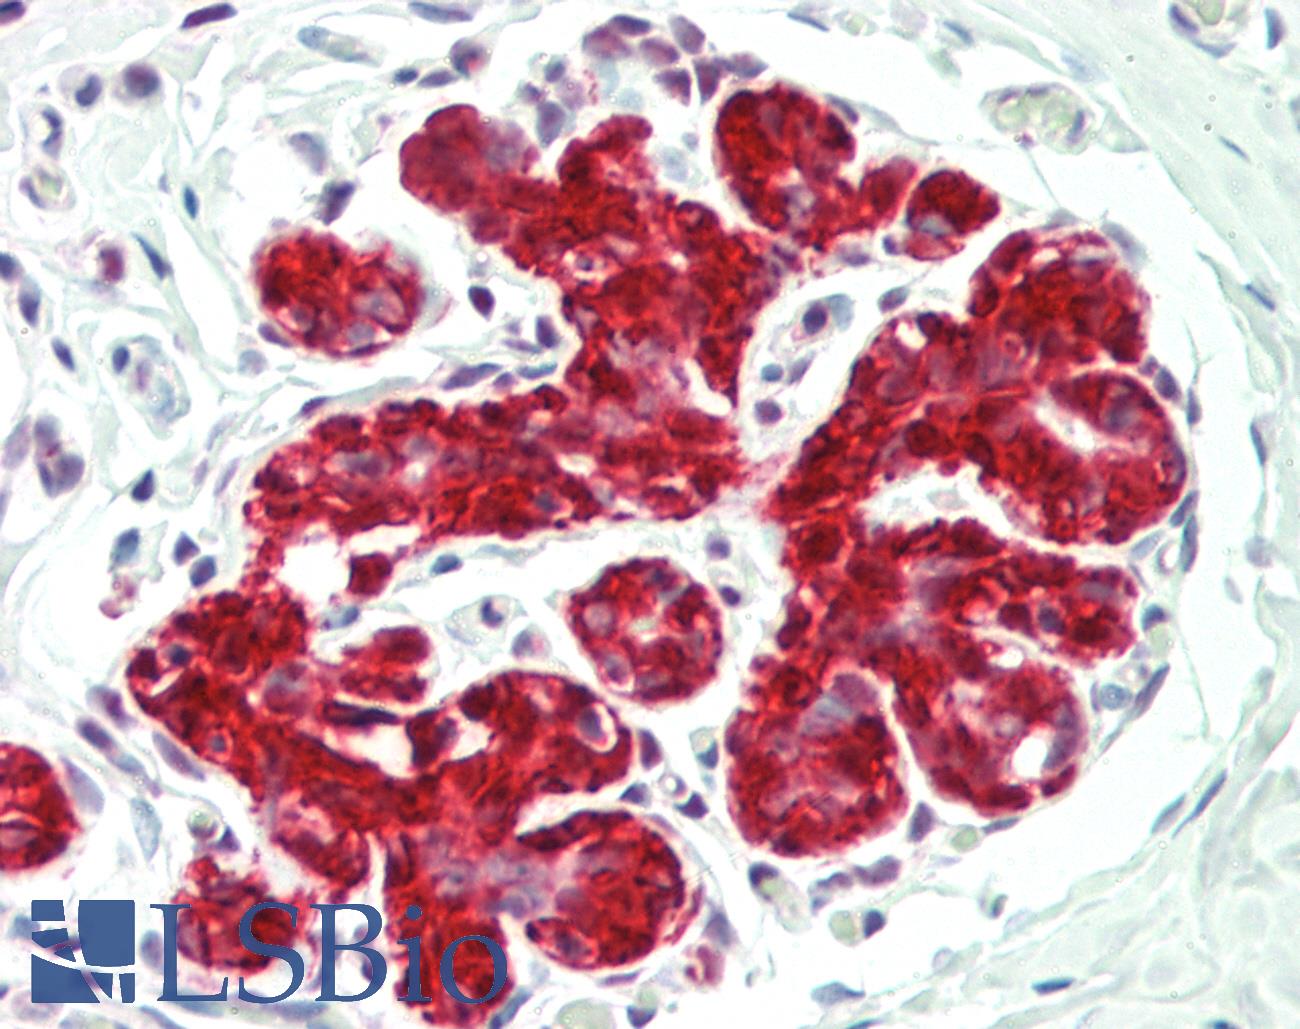 ENO1 / Alpha Enolase Antibody - Human Breast: Formalin-Fixed, Paraffin-Embedded (FFPE)